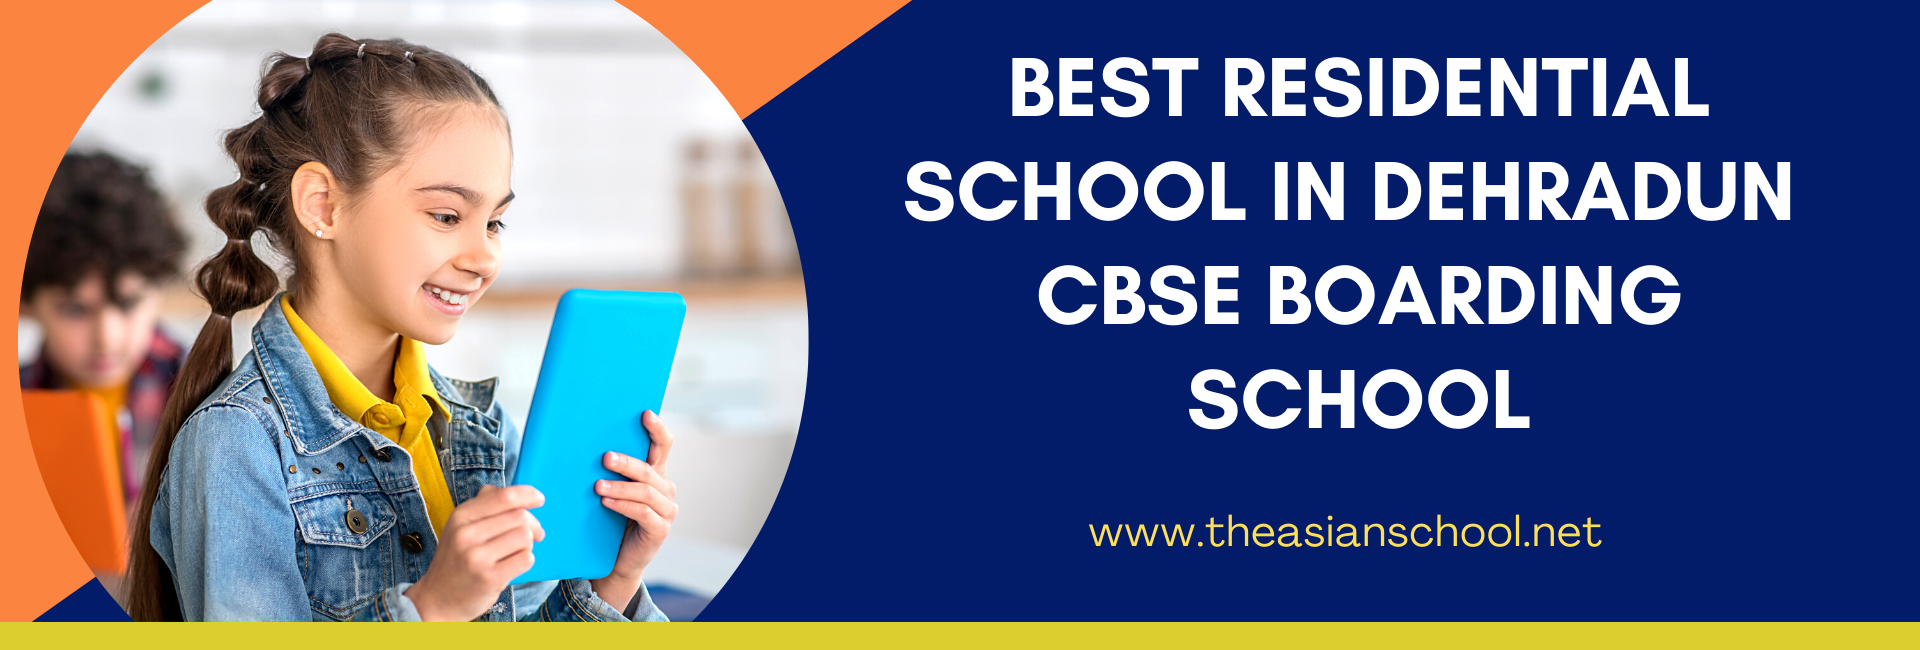 Best Residential School in Dehradun |CBSE Boarding School - My Blog Time